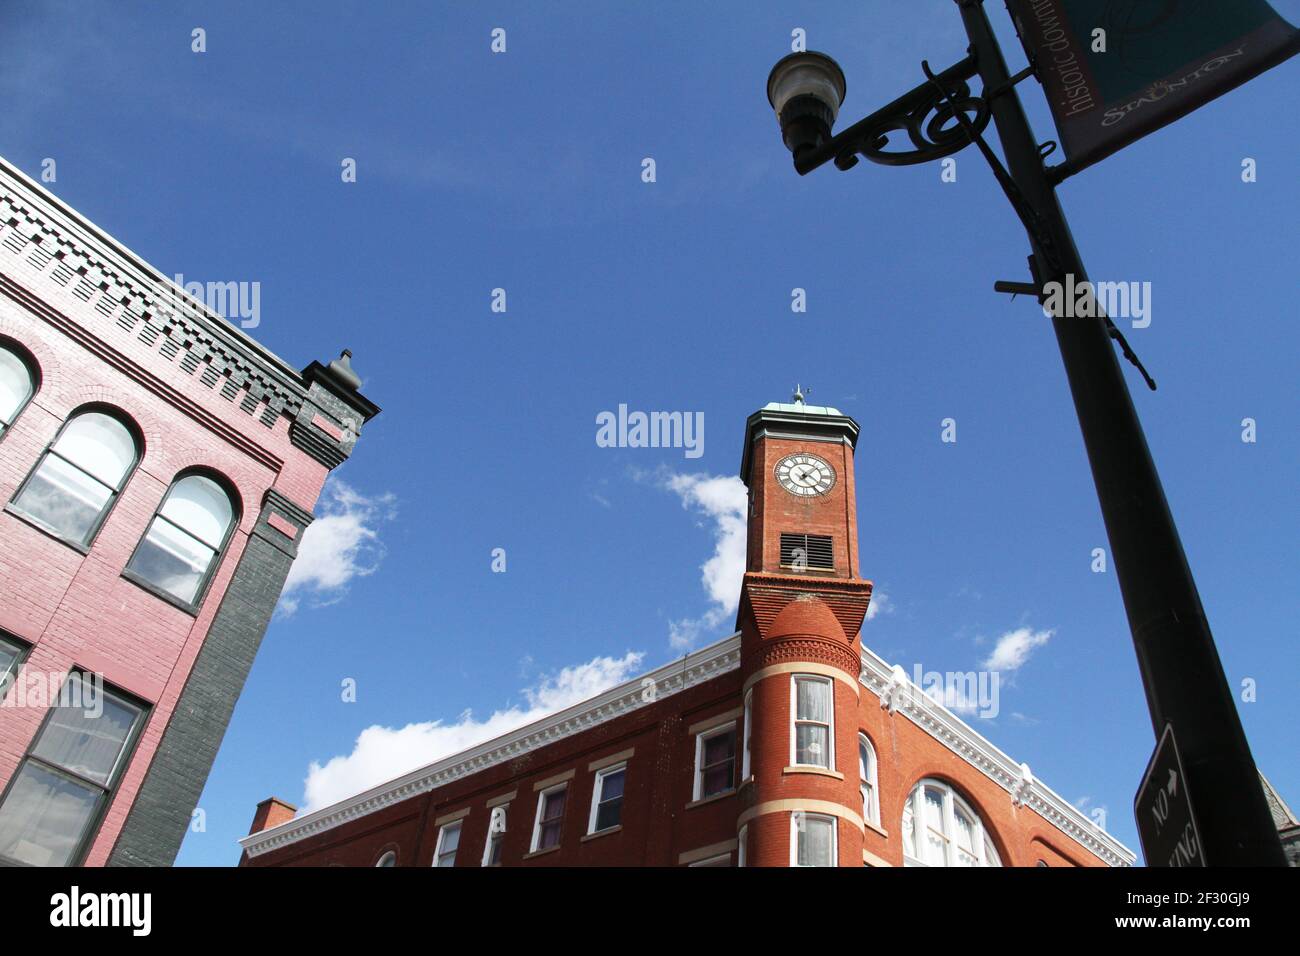 Queen Anne Clock Tower in Downtown Staunton, VA, USA Stock Photo